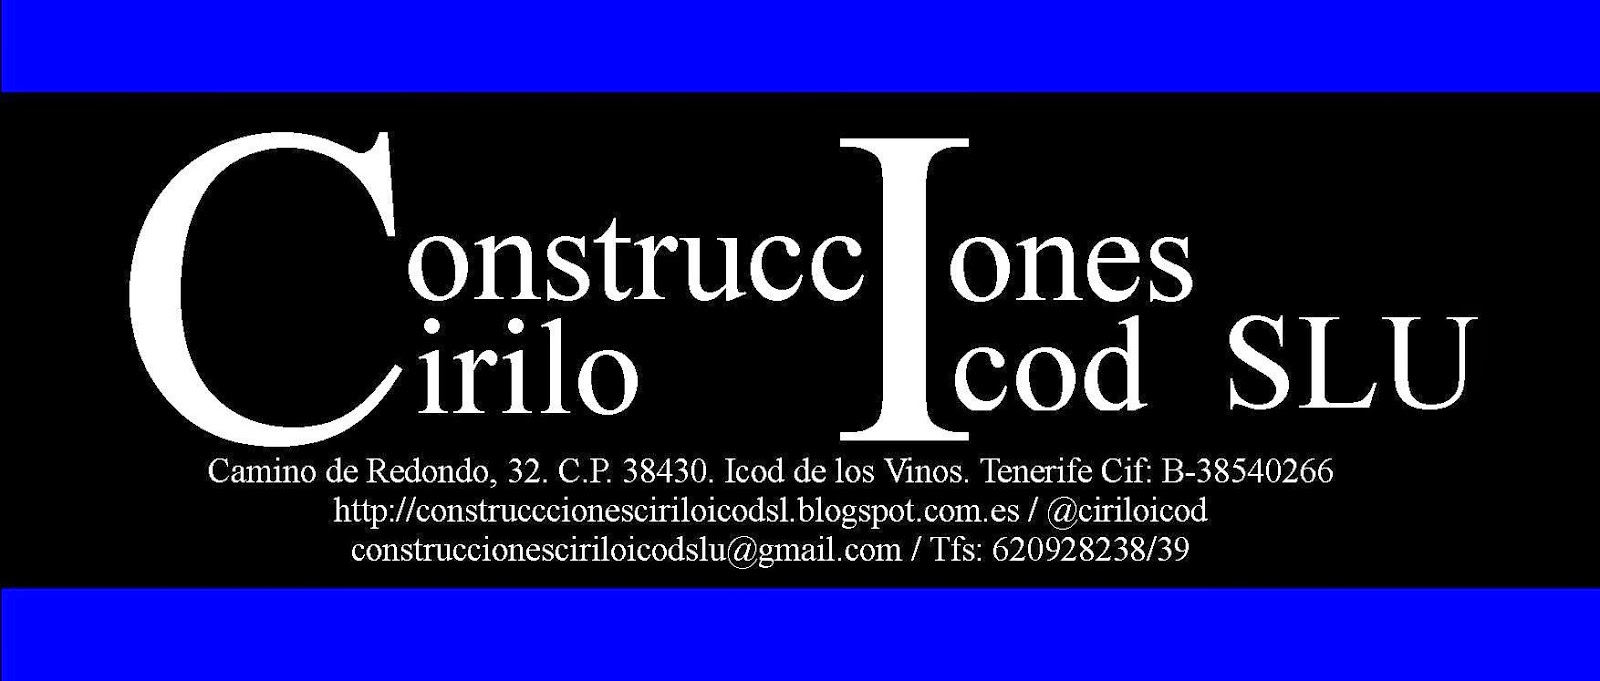 construccionesciriloicodslu@gmail.com